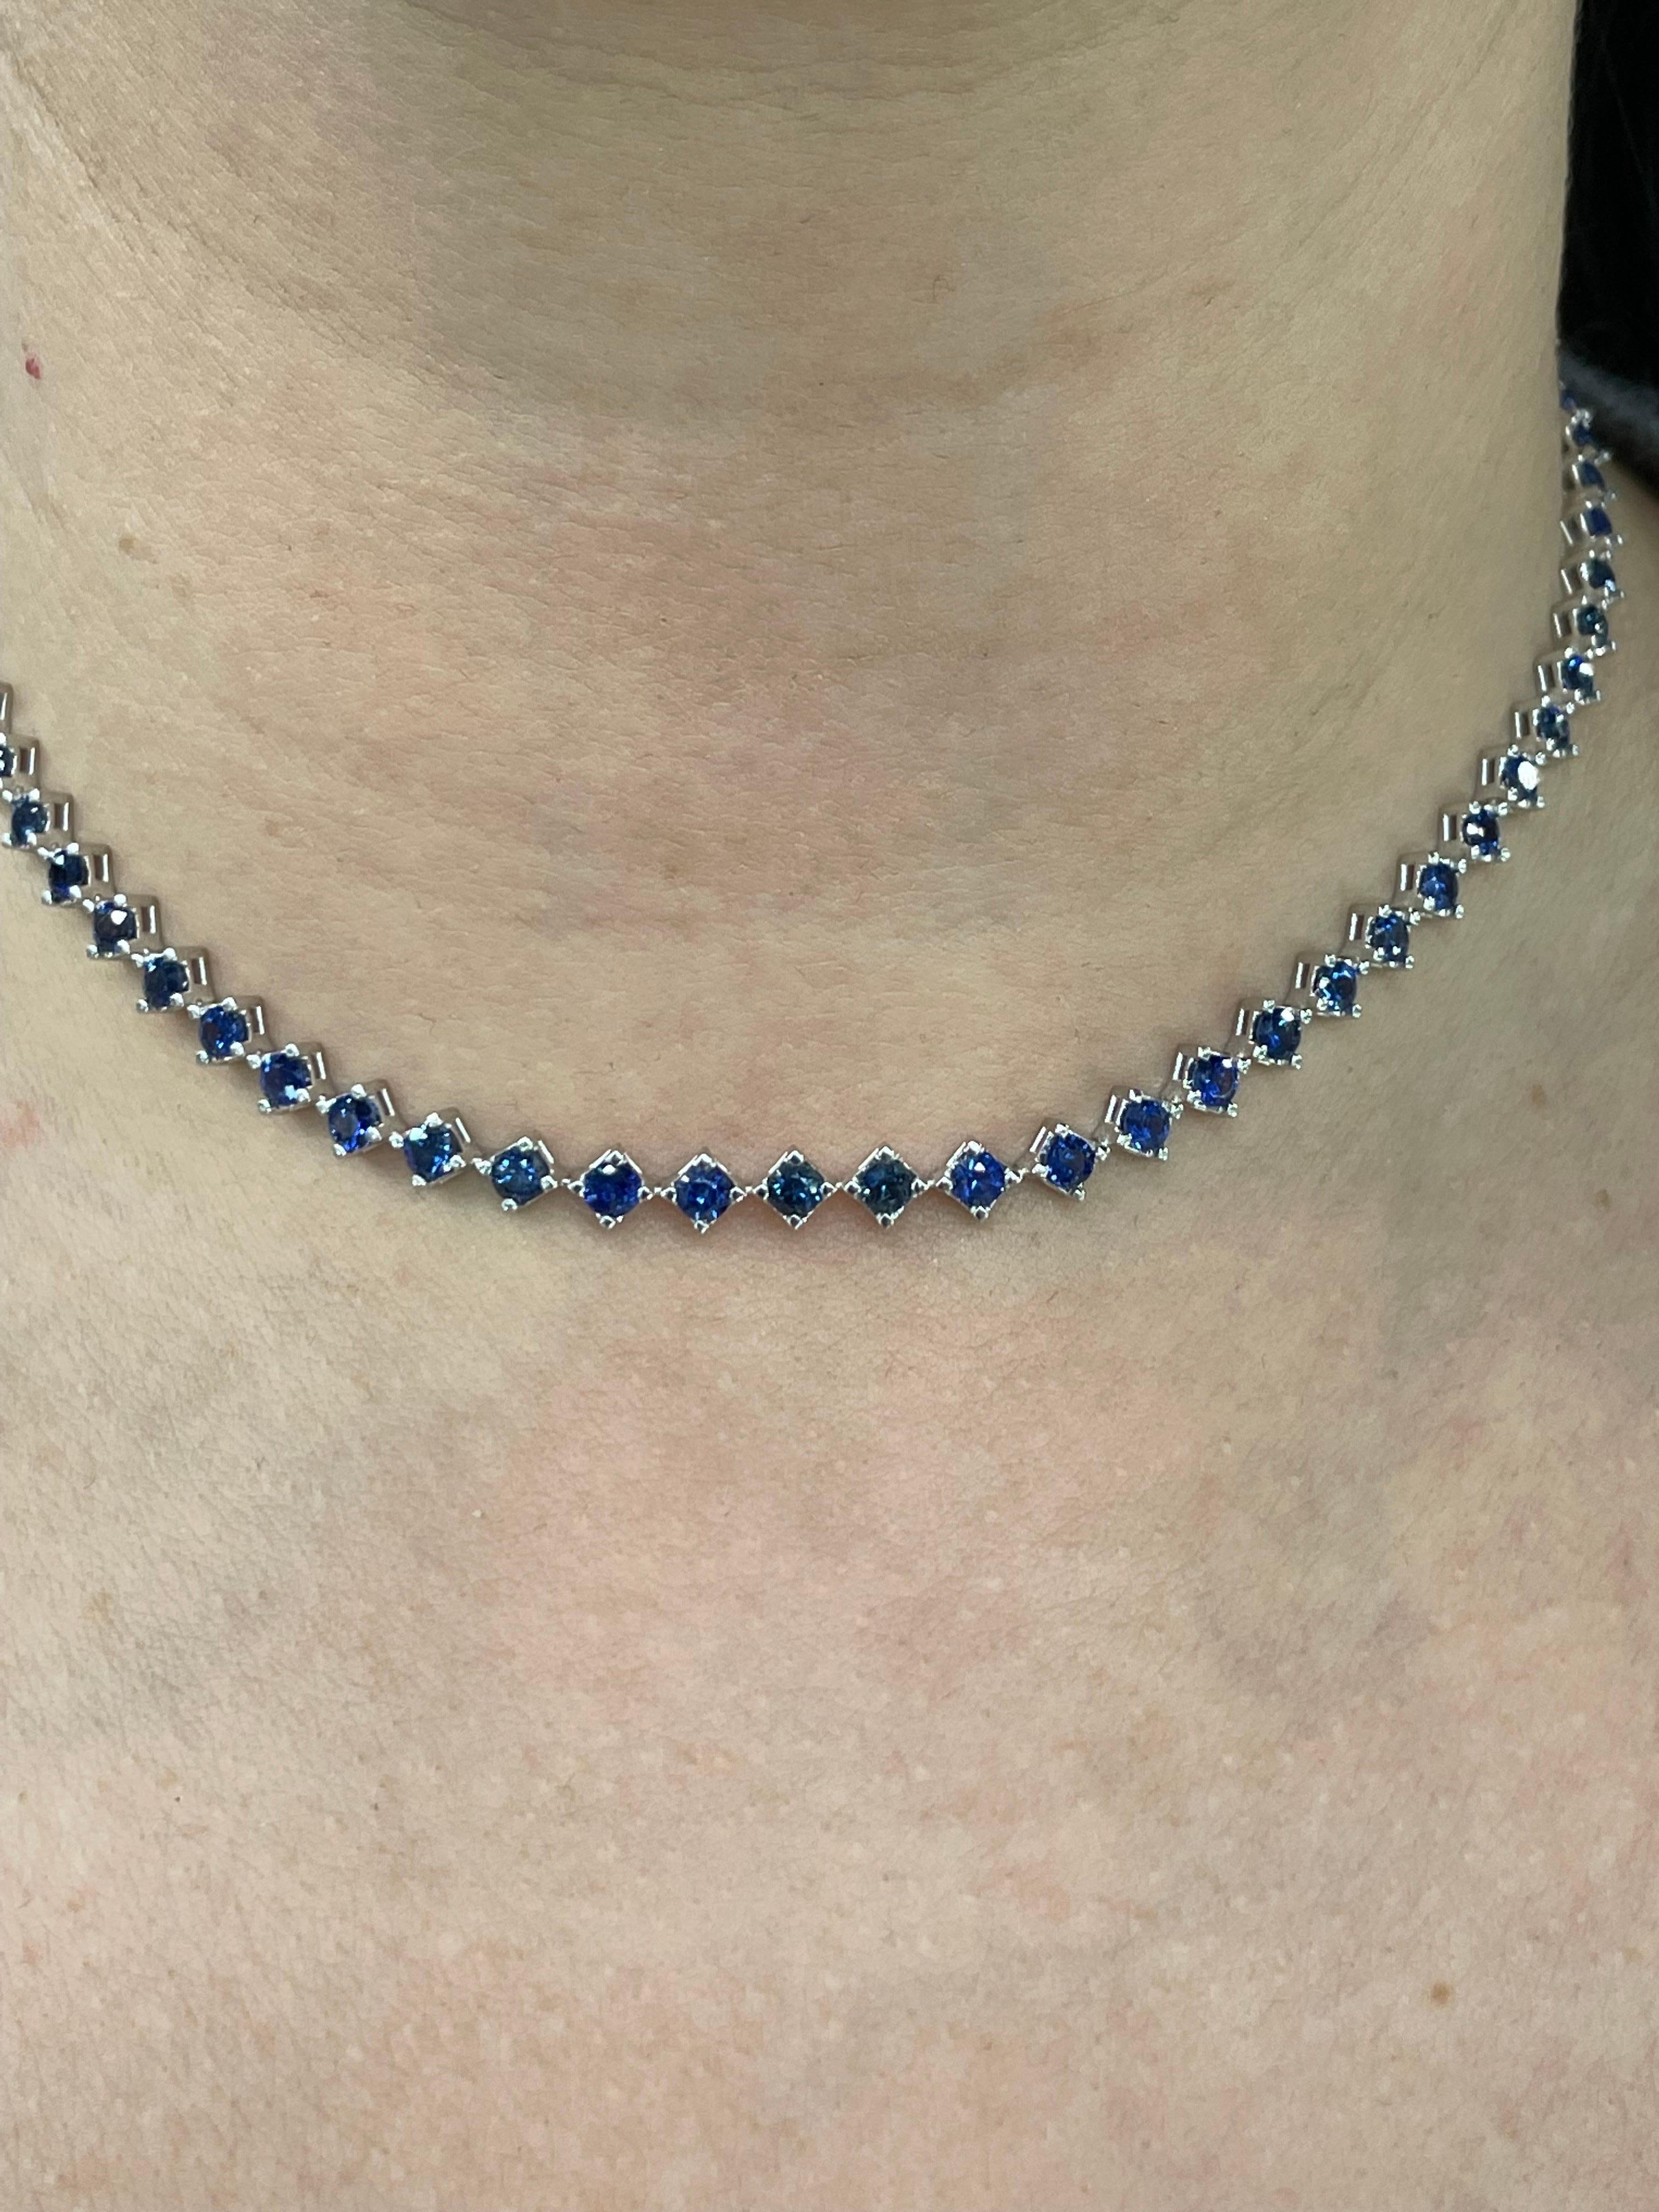 Blue Sapphire Choker Necklace & Bracelet 14 Karat White Gold 6.06 Carats 9